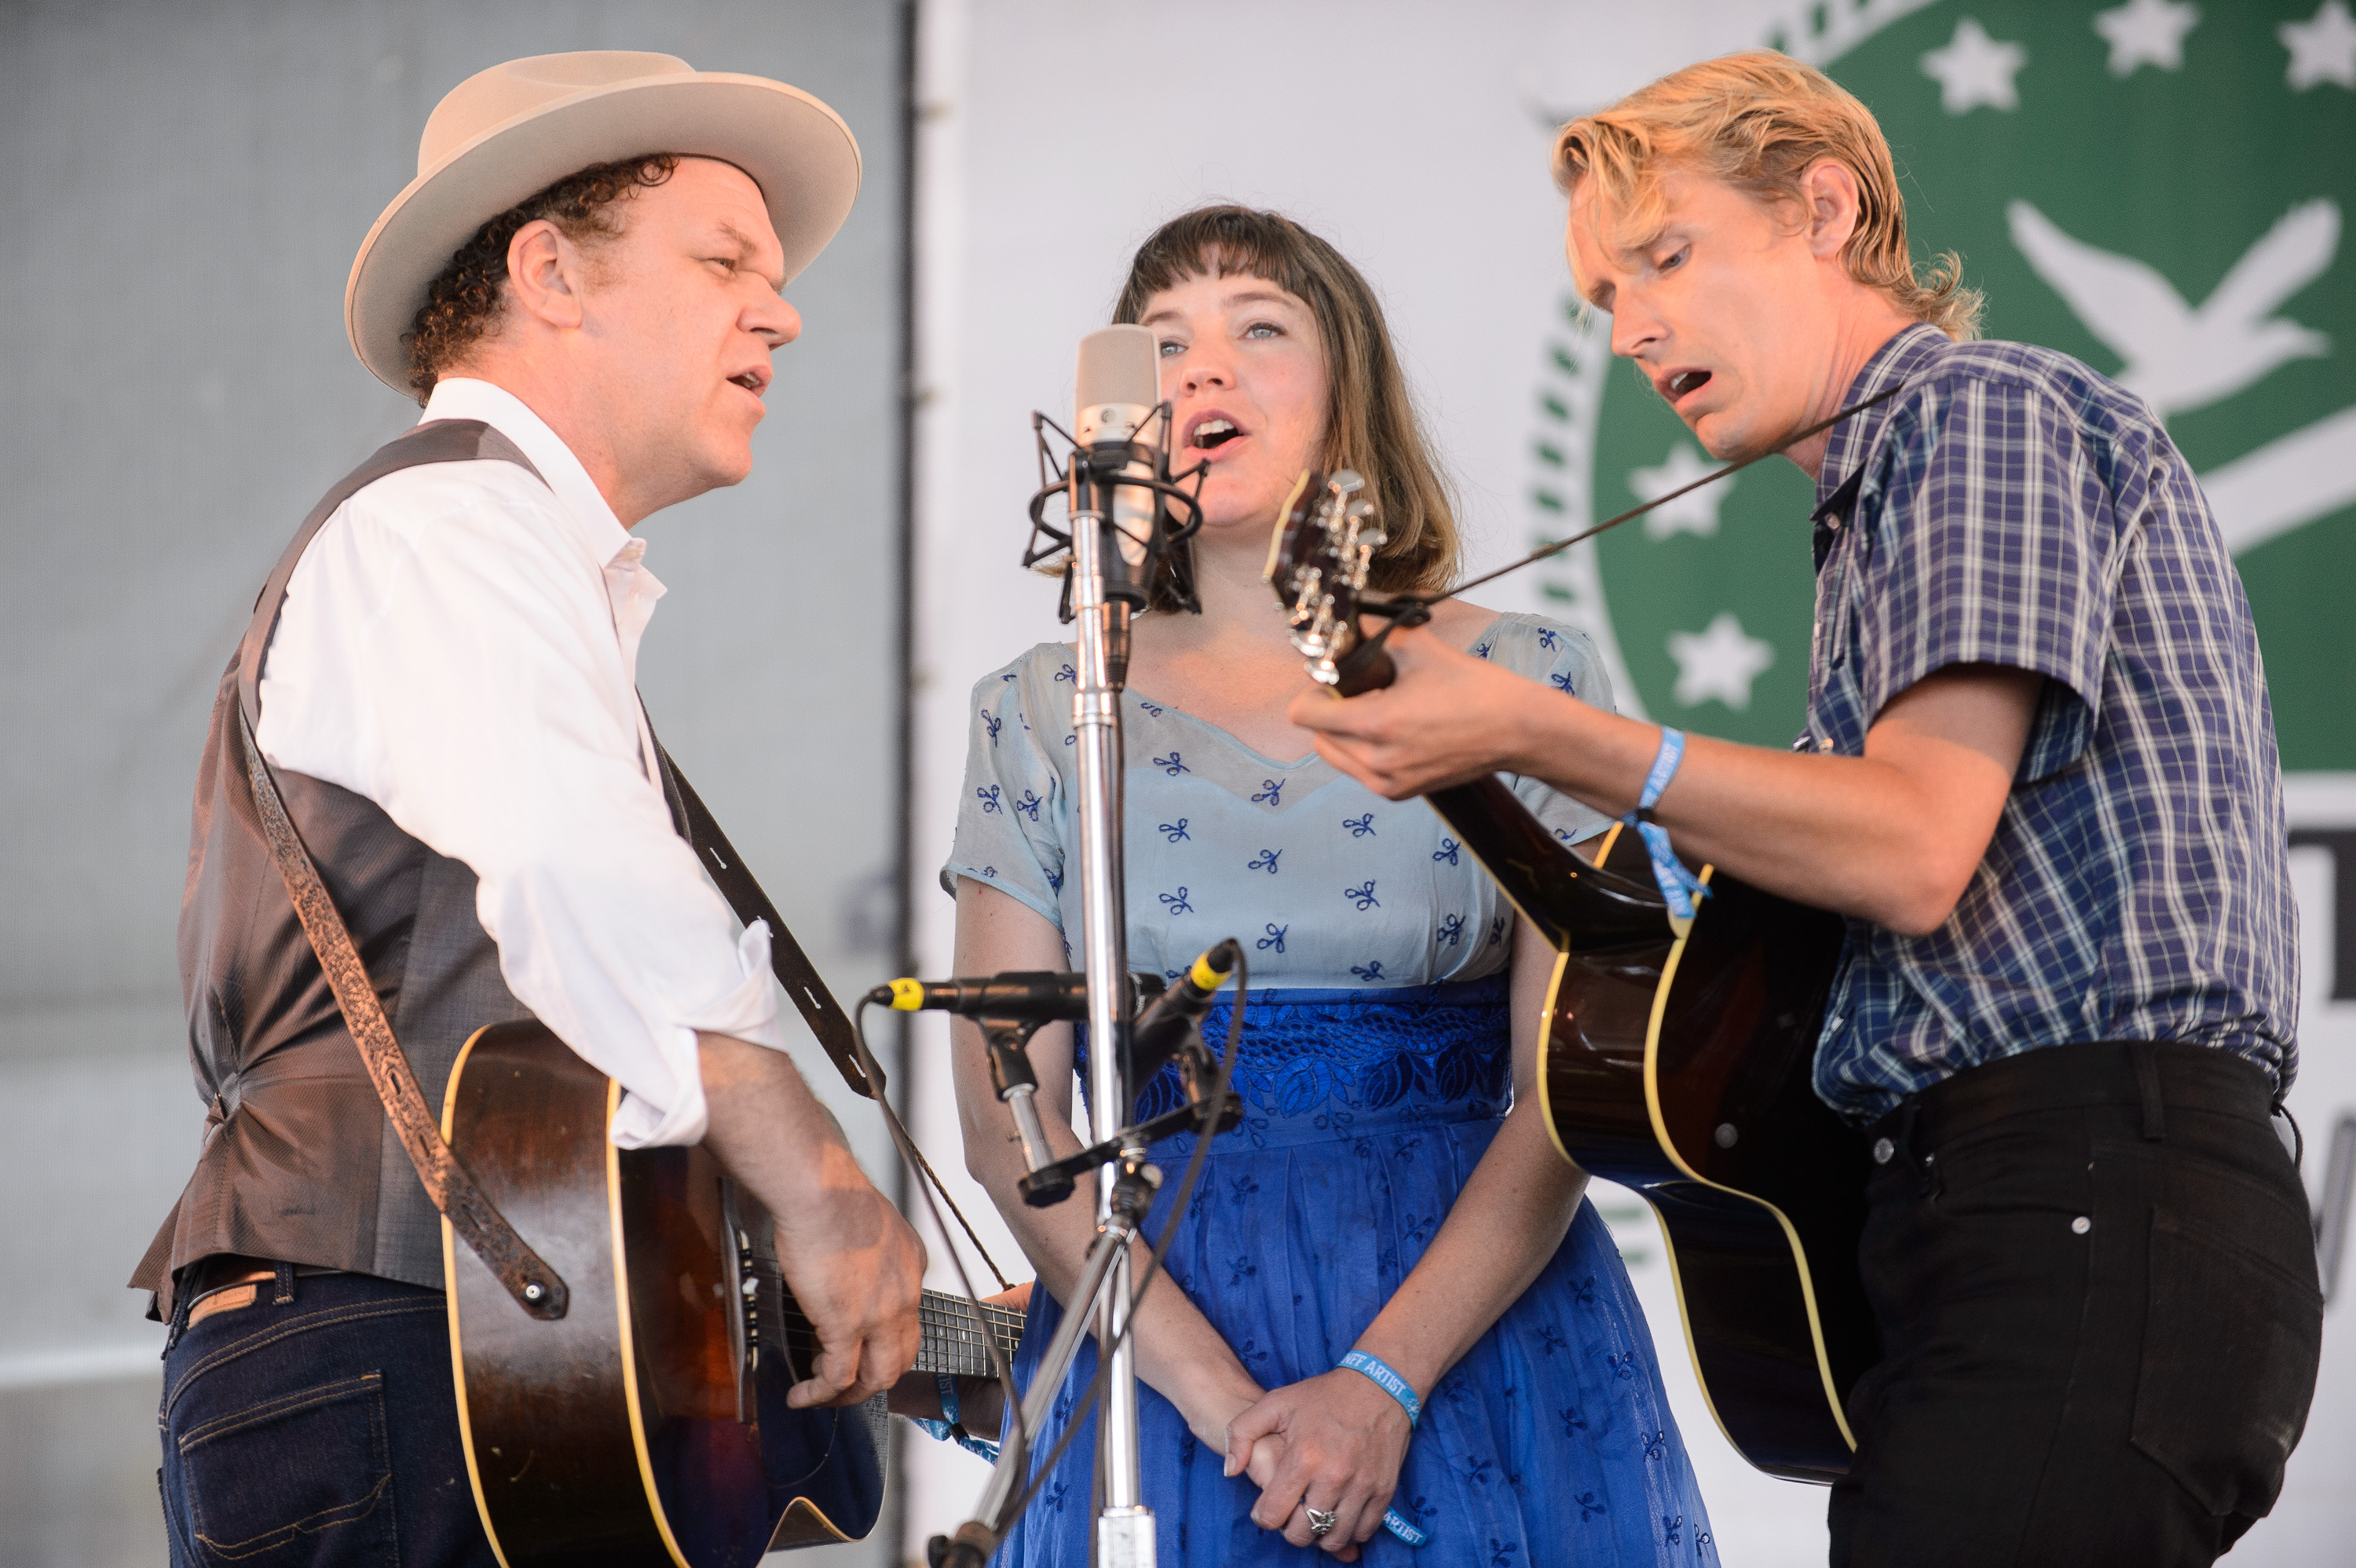 John Reilly & Friends performs at the 2014 Newport Folk Festival